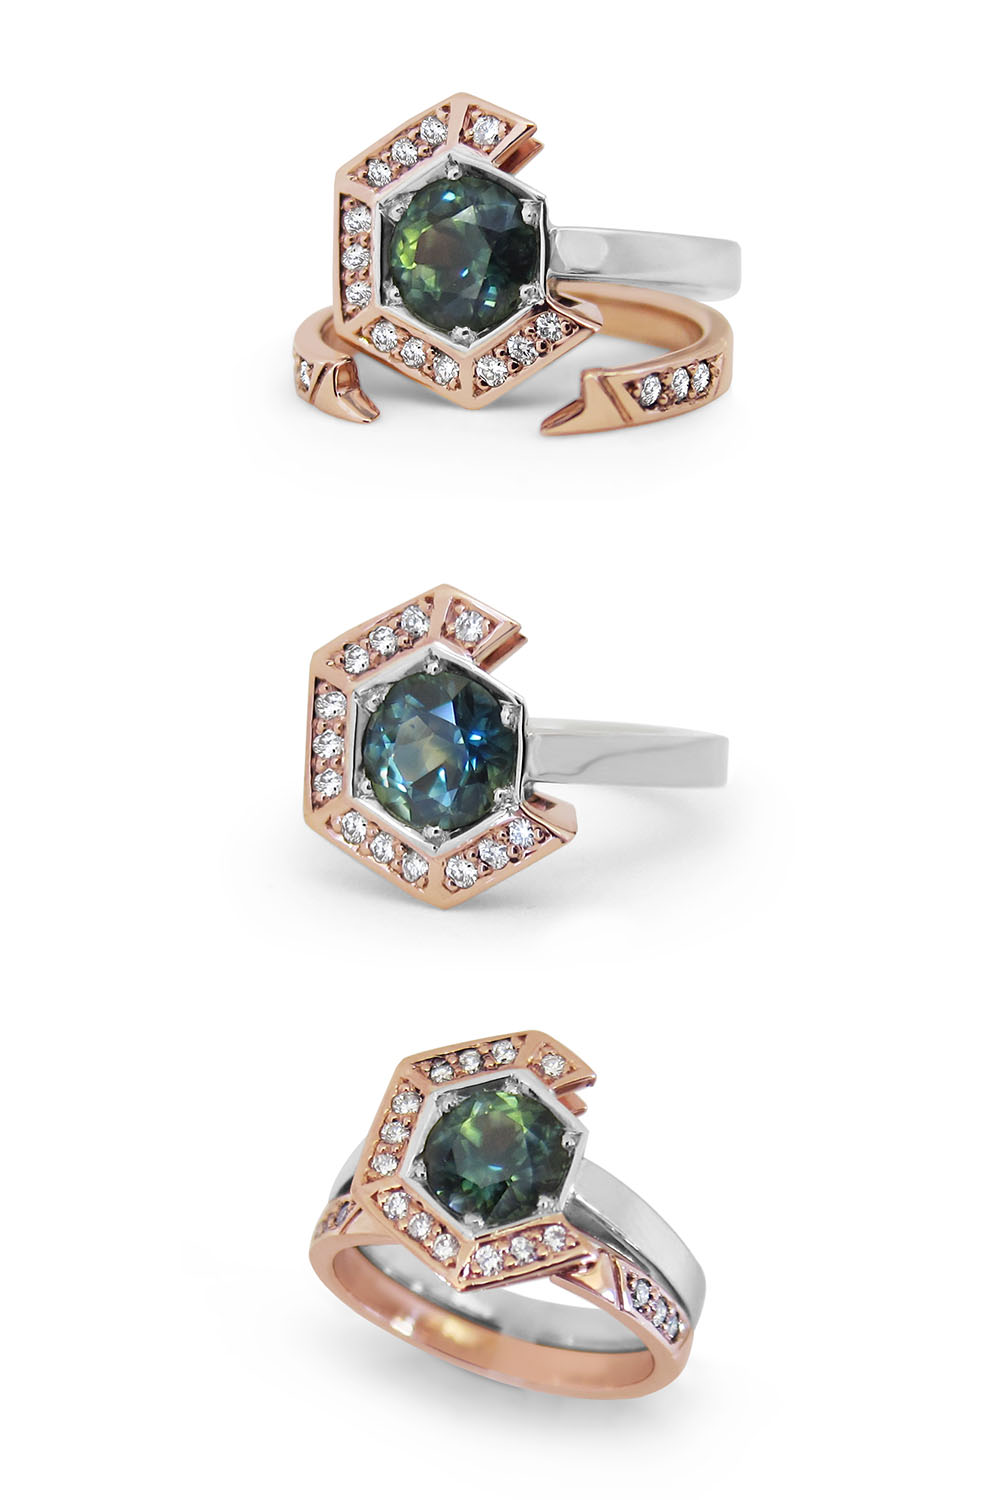 Australian parti sapphire, diamond, rose gold and white gold ring set